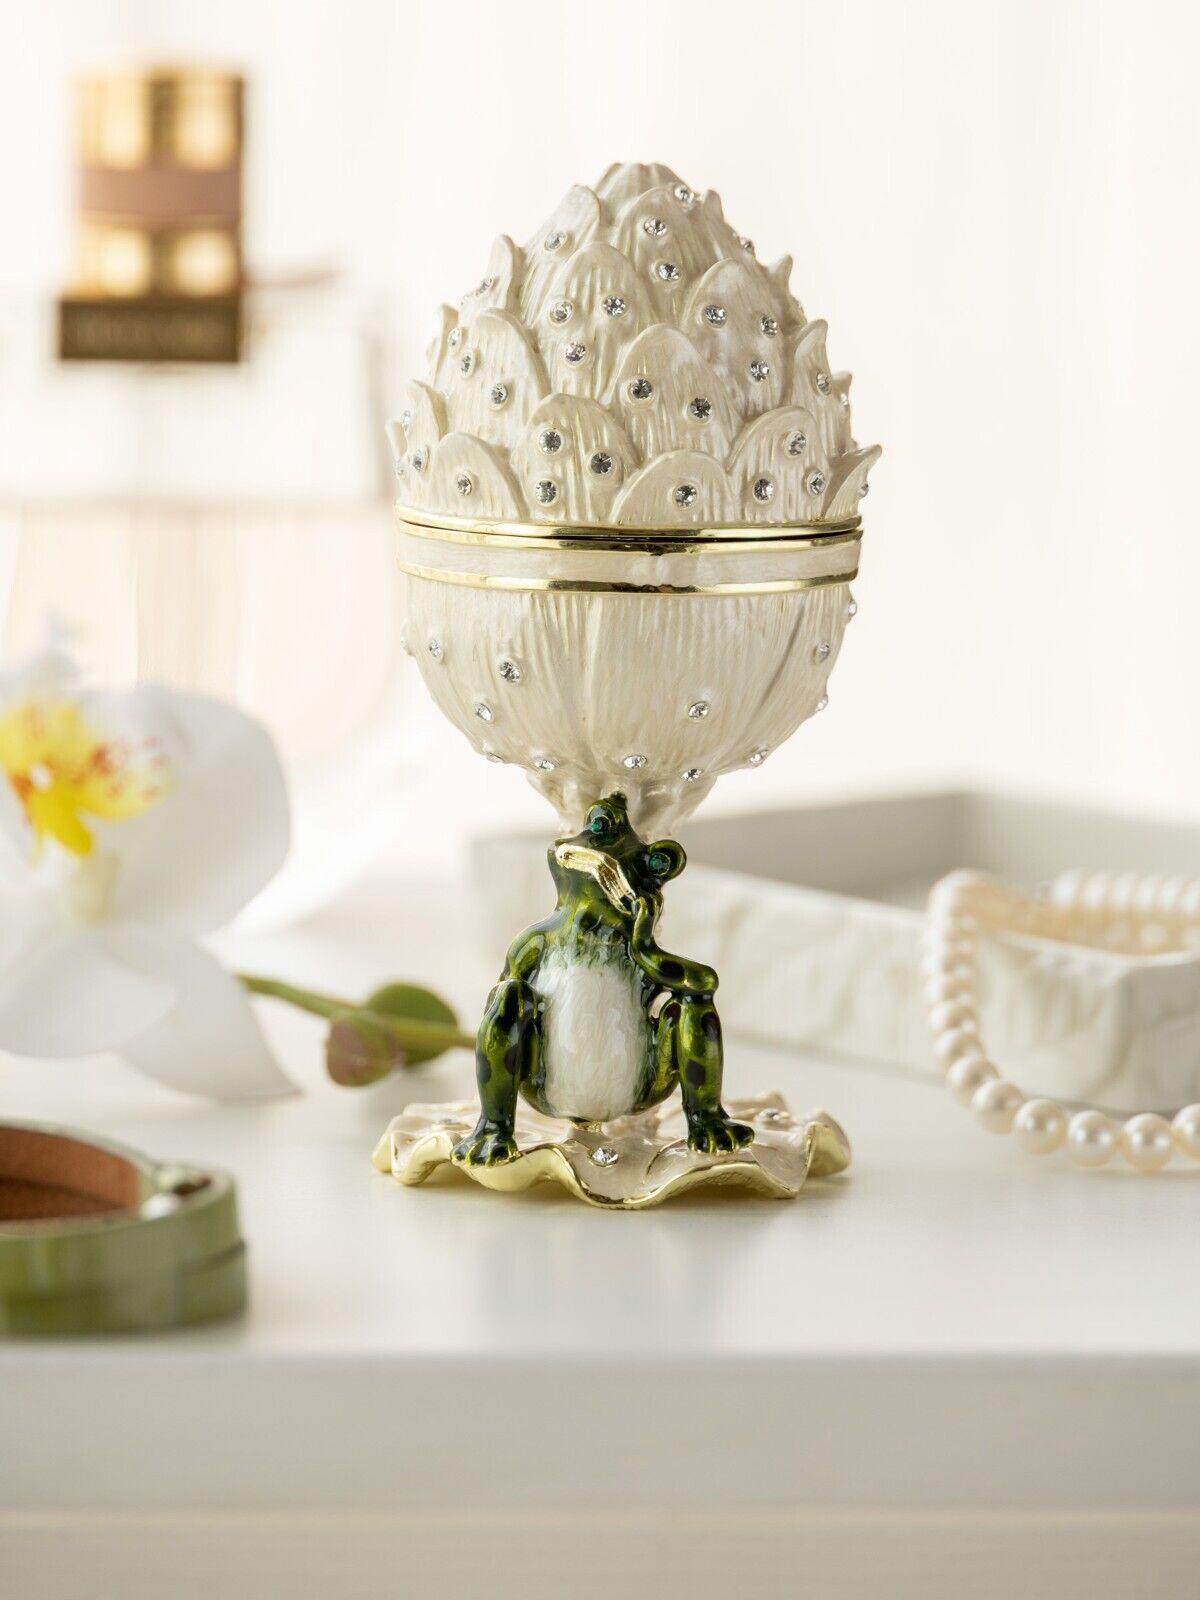 Keren Kopal Faberge Egg with Frog Trinket Box Handmade with Austrian Crystals